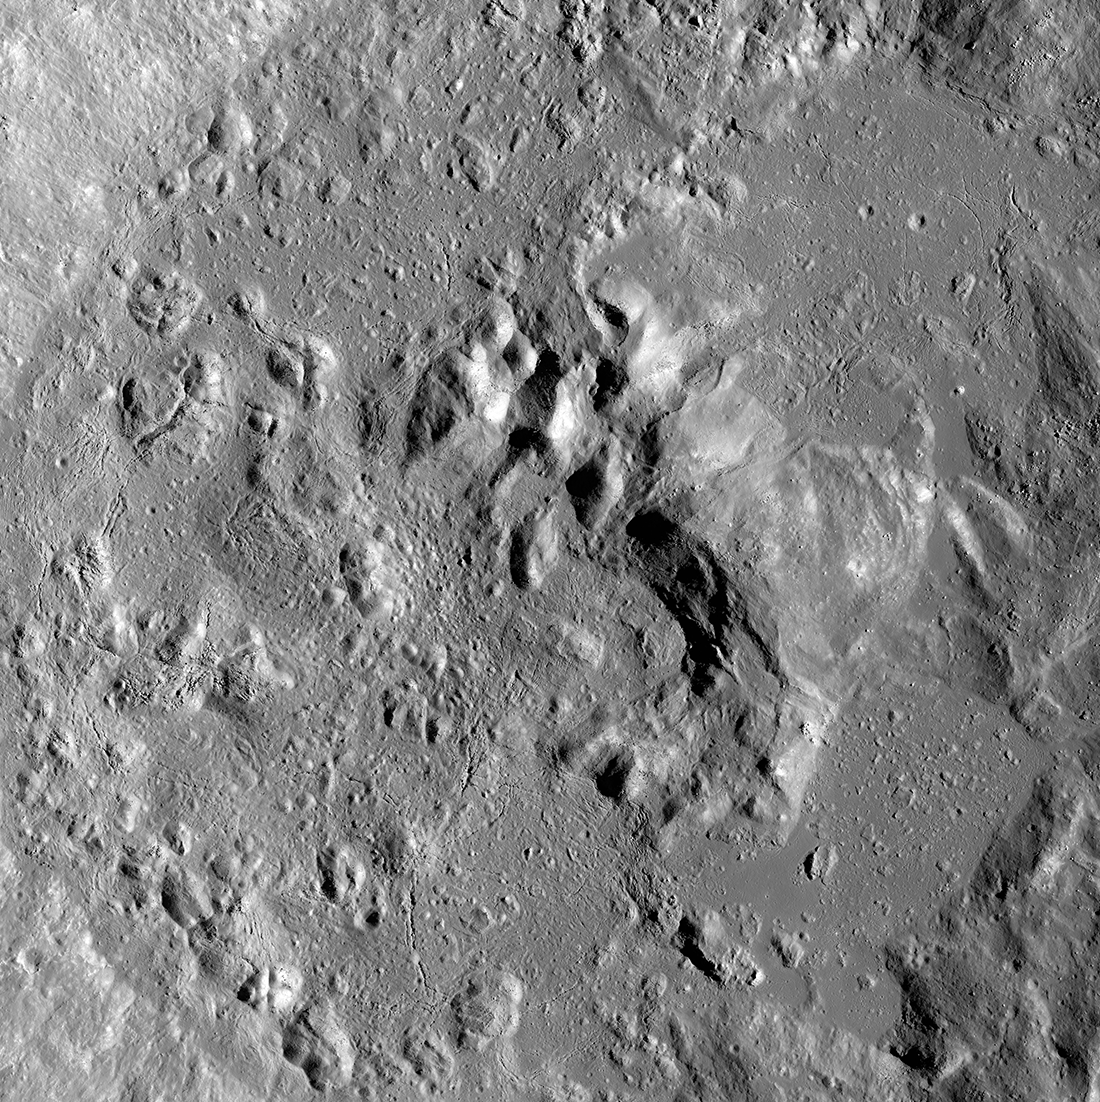 Farside Impact: Crookes Crater 